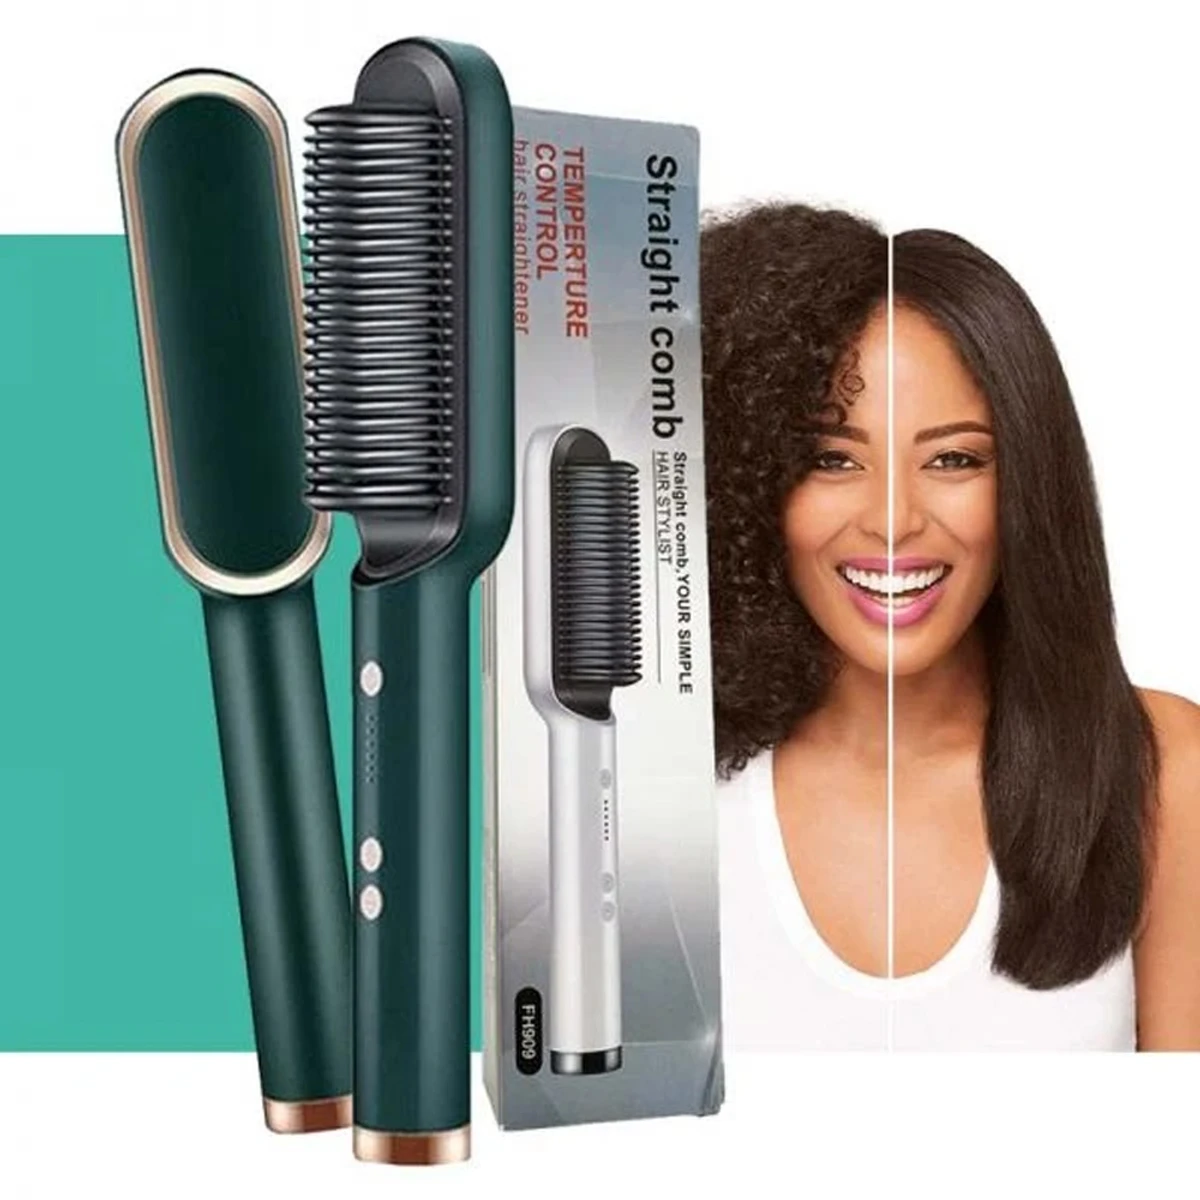 Product details of LCD Screen Hot-Air Hair Styling Comb Multifunctional Straightener Hair Brush Hair Dryer for Men&Women-G16-Green